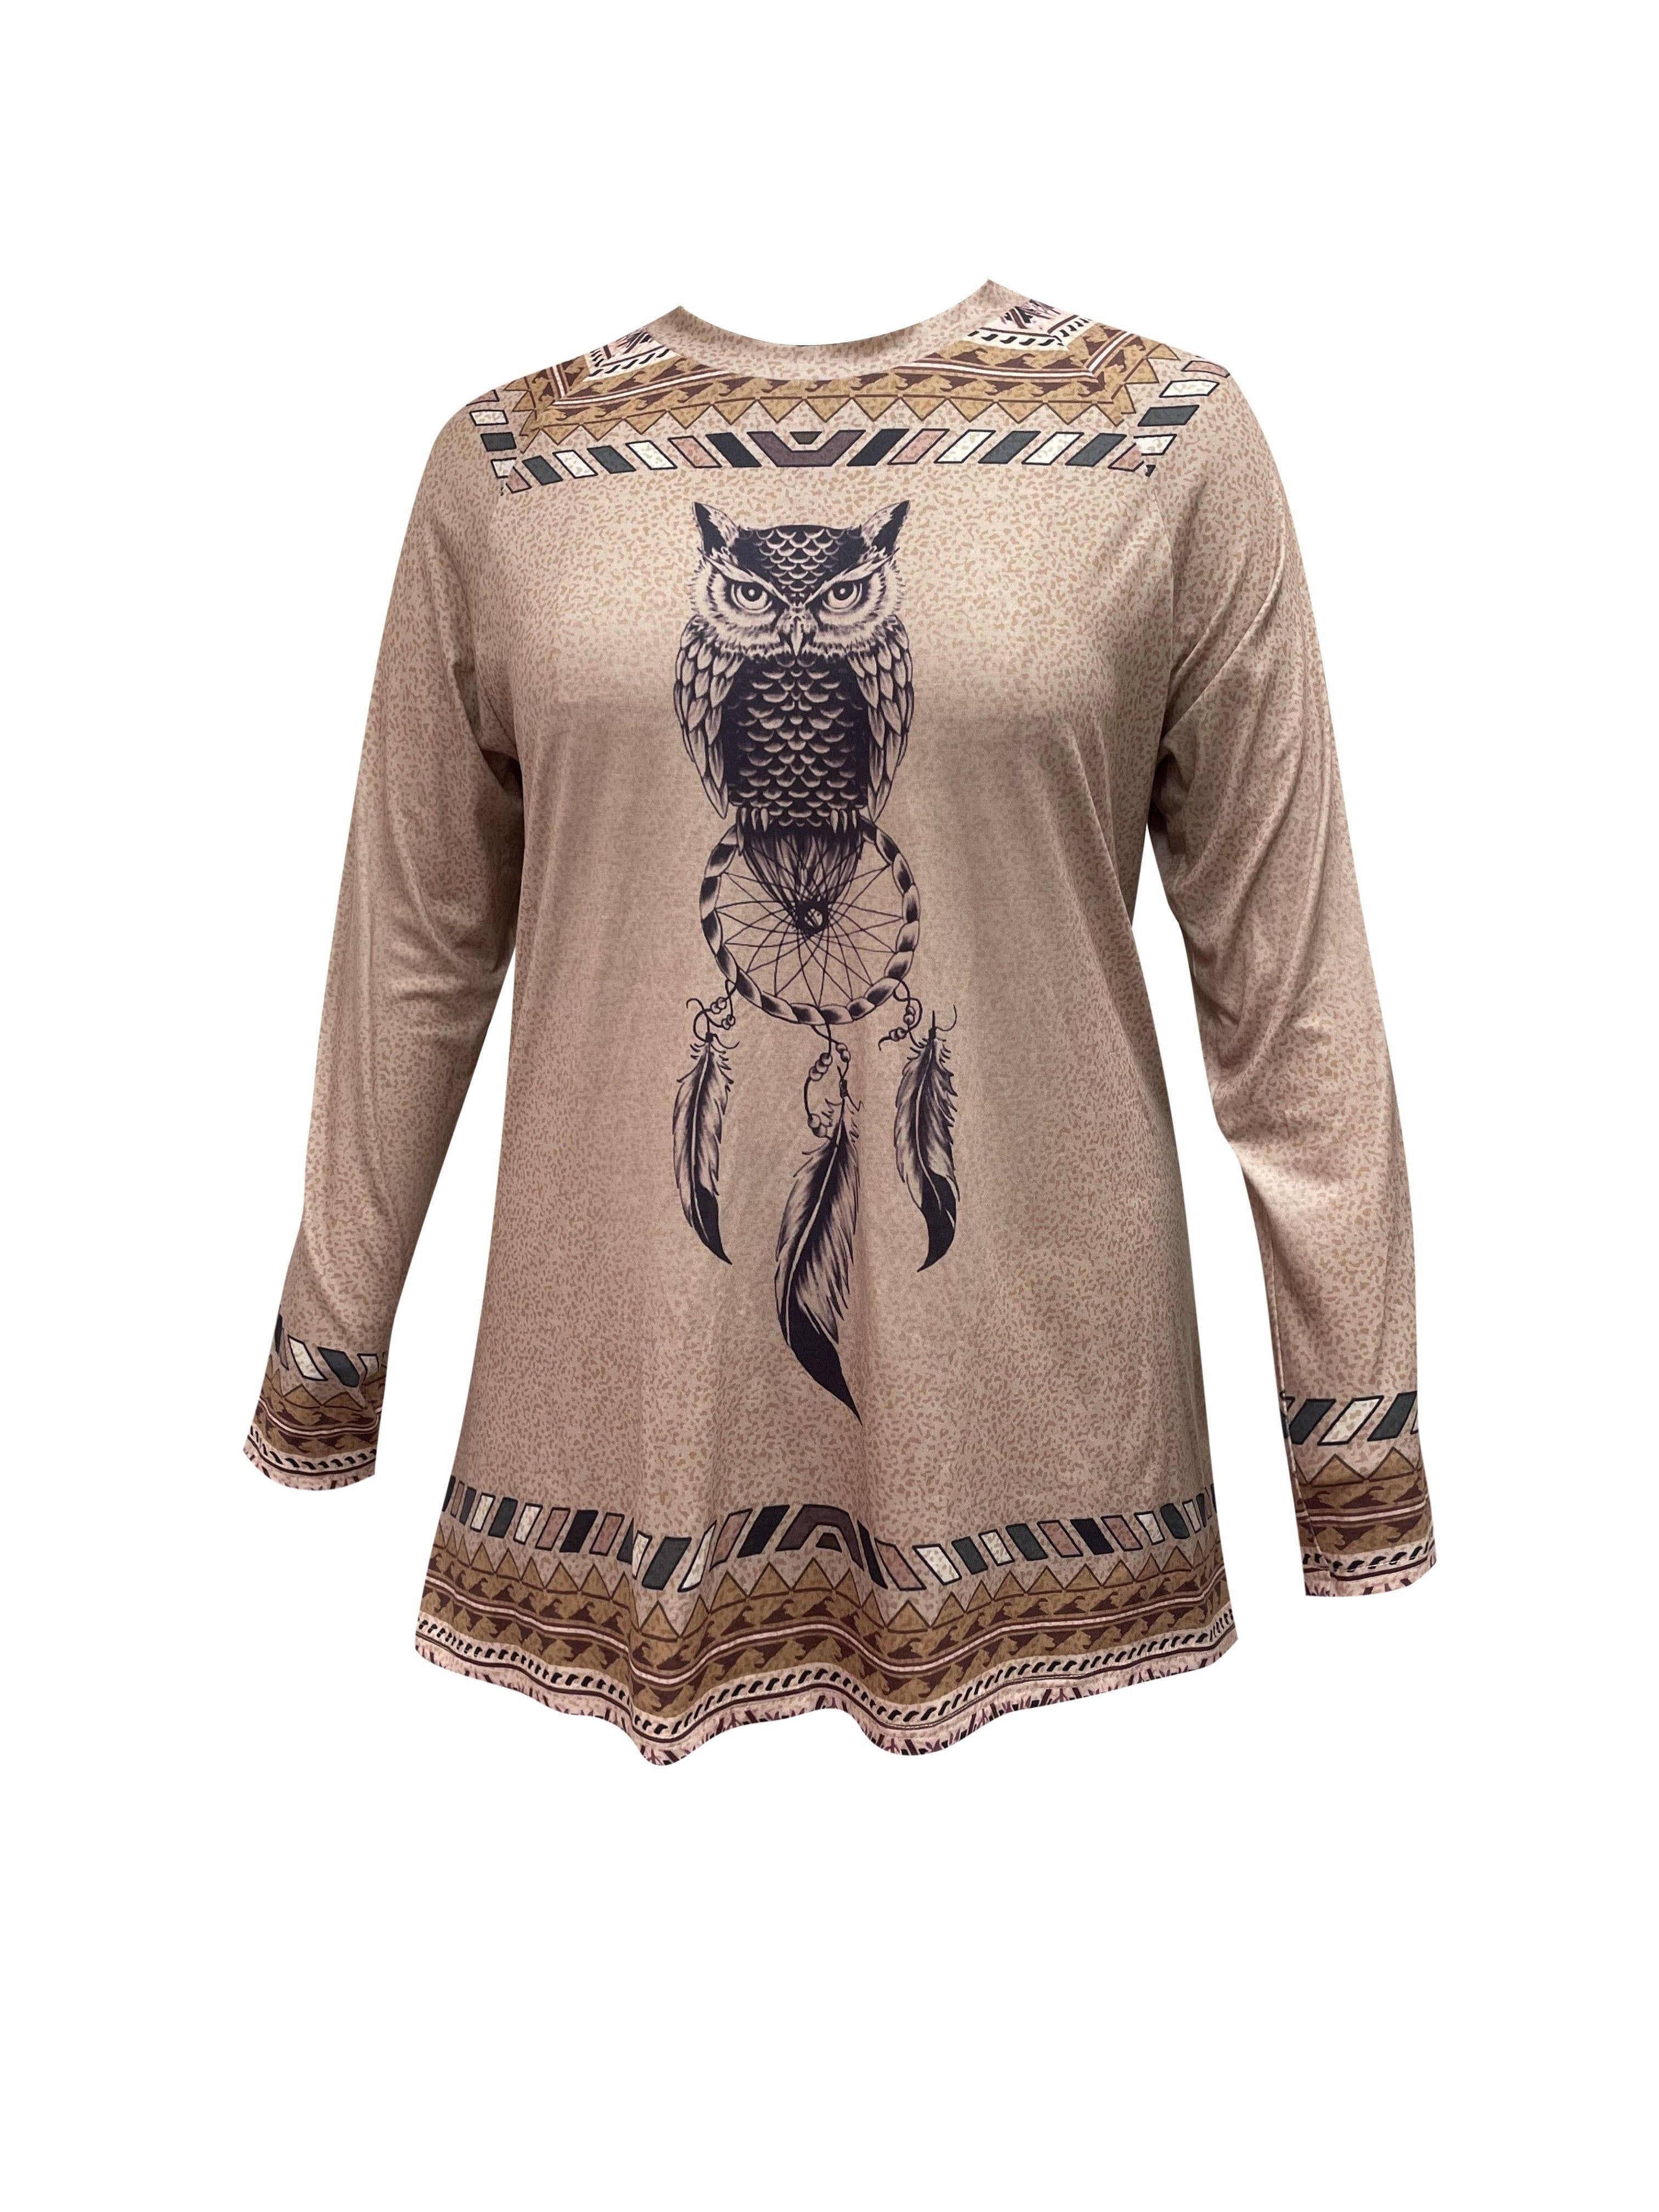 Plus Size Ethnic Style Top, Women's Plus Tribal Feather & Owl & Geometric Print Long Sleeve Round Neck Tunic Top